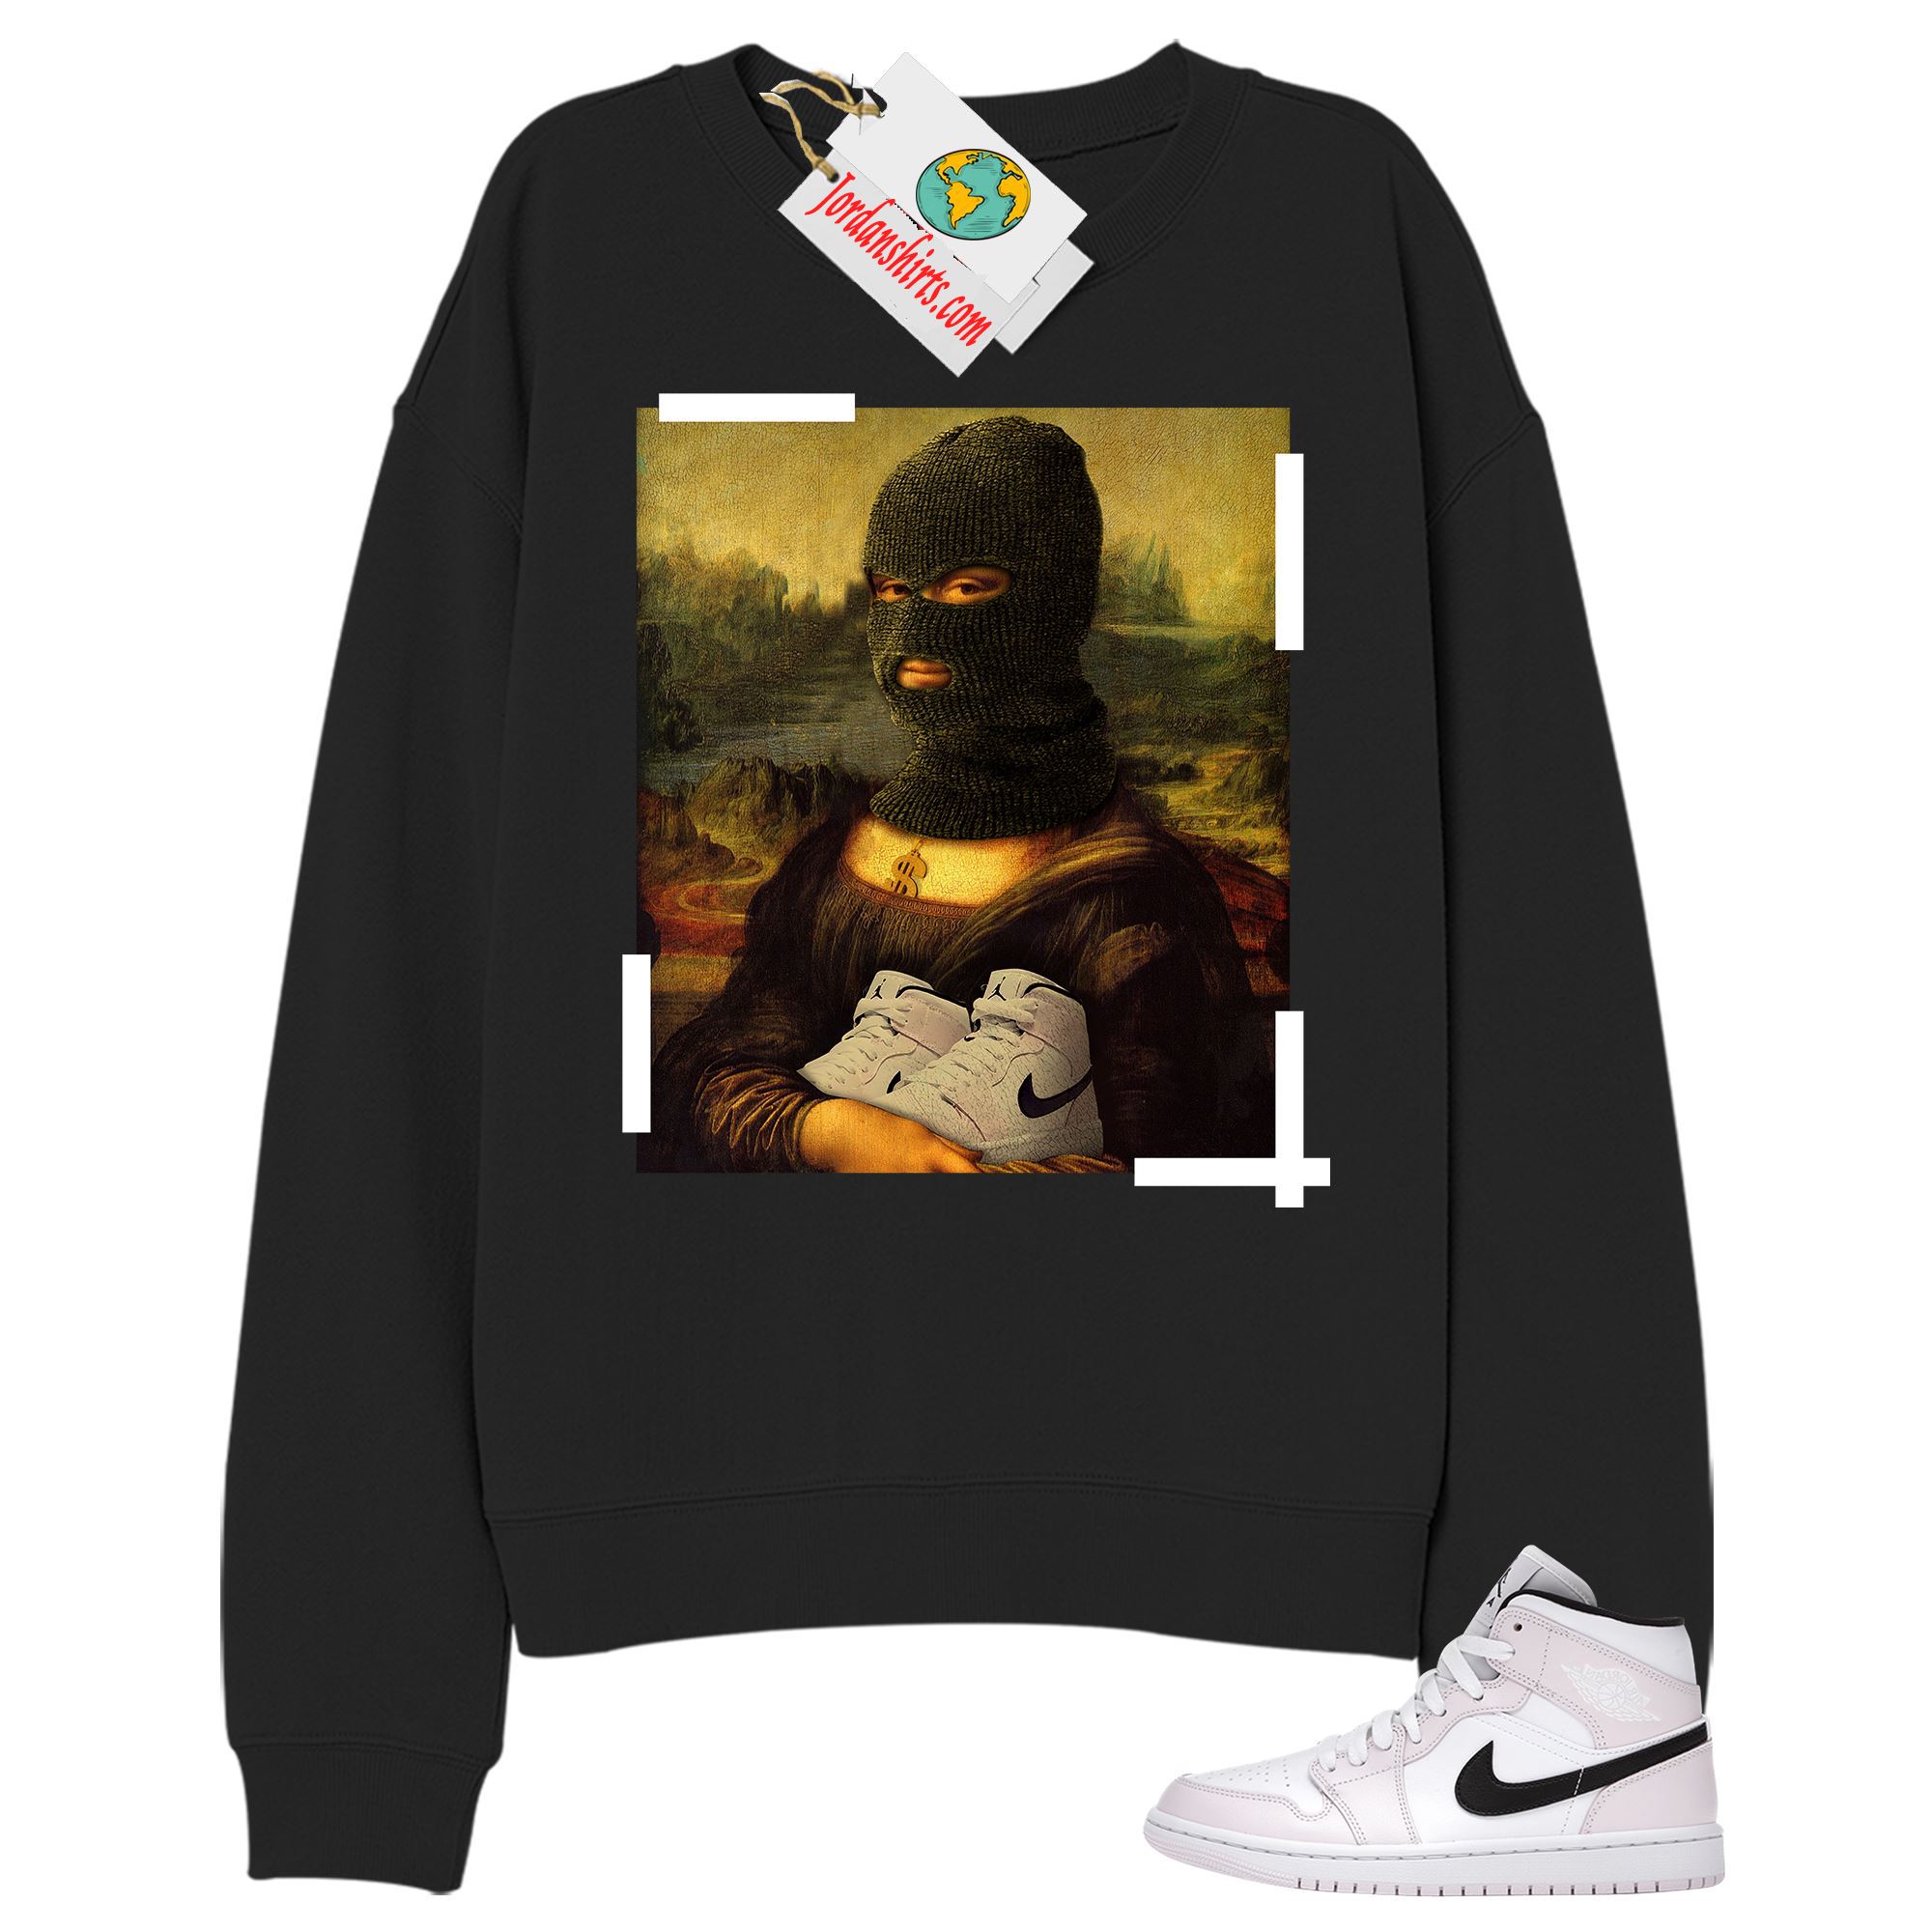 Jordan 1 Sweatshirt, Off White Mona Lisa Black Sweatshirt Air Jordan 1 Barely Rose 1s Full Size Up To 5xl